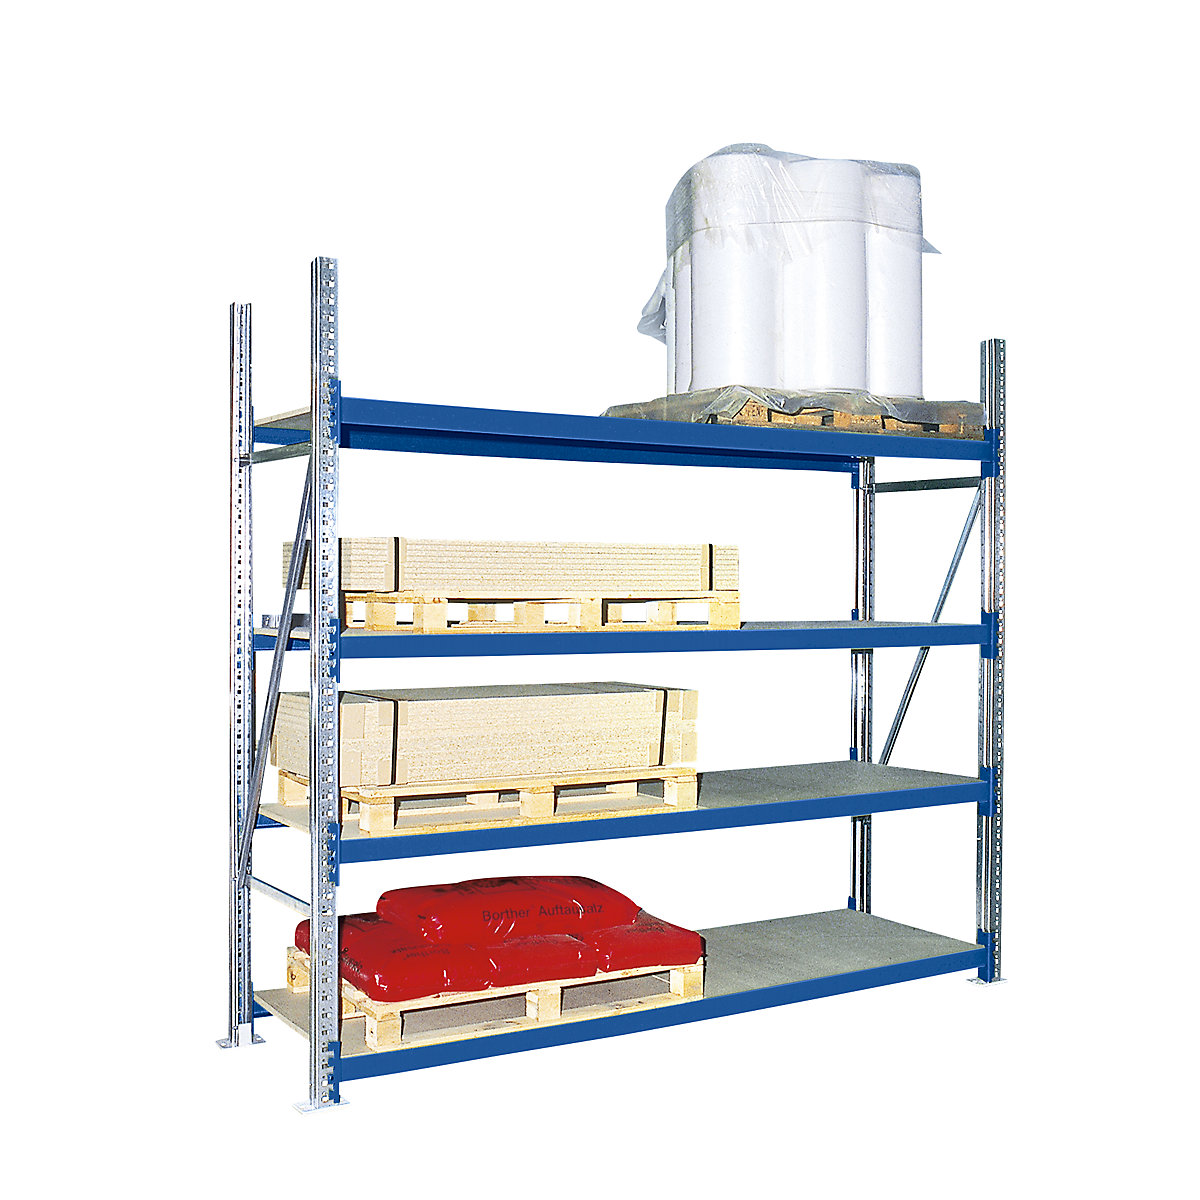 Wide span shelving unit with moulded chipboard shelves – eurokraft pro, depth 600 mm, cross beam length 1350 mm, height 2500 mm, standard shelf unit, blue RAL 5010